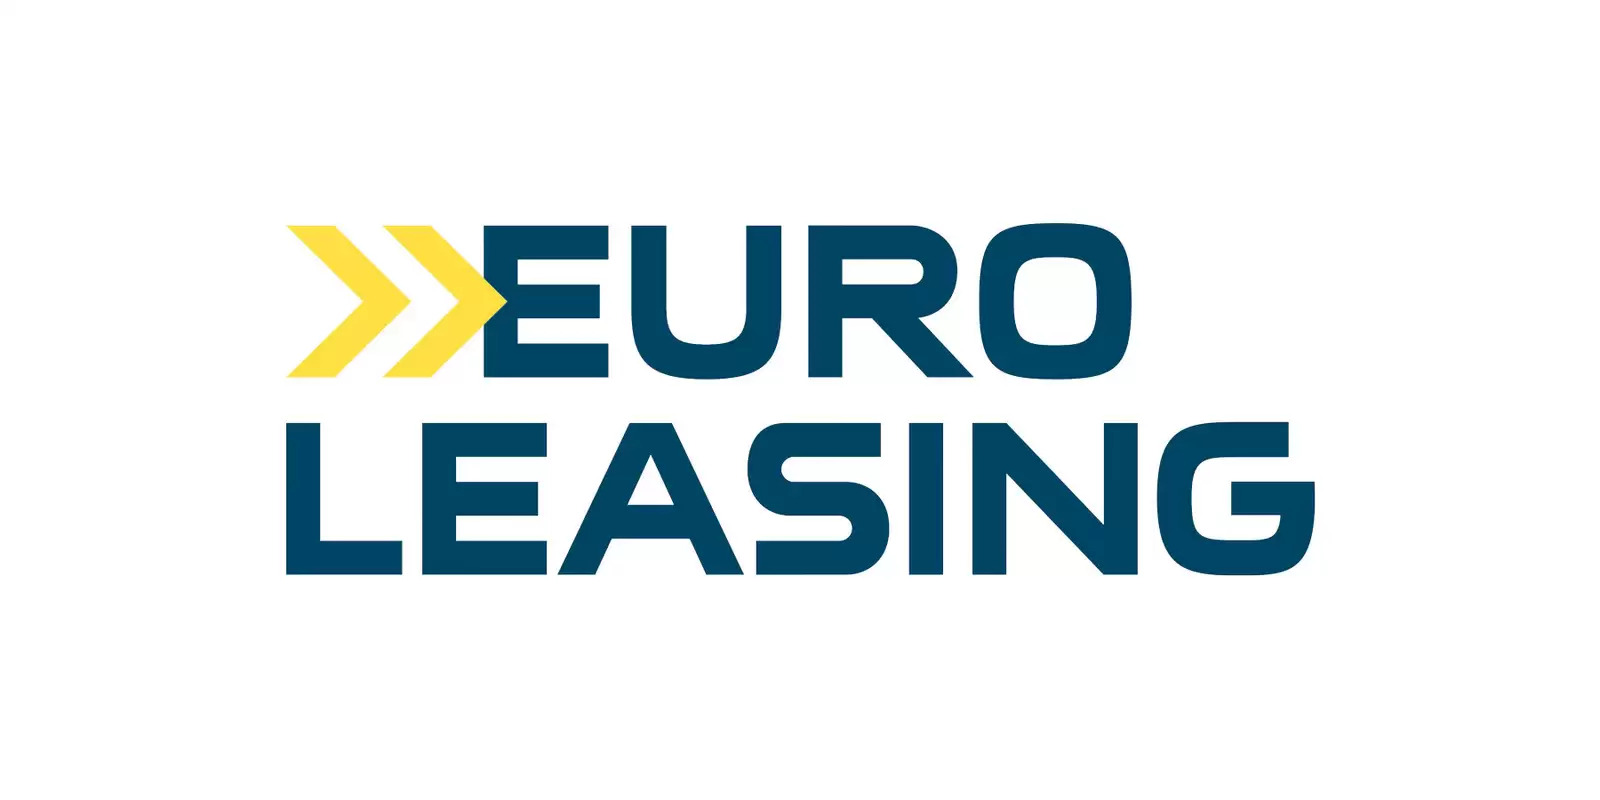 Euro-leasing (trailer Business)